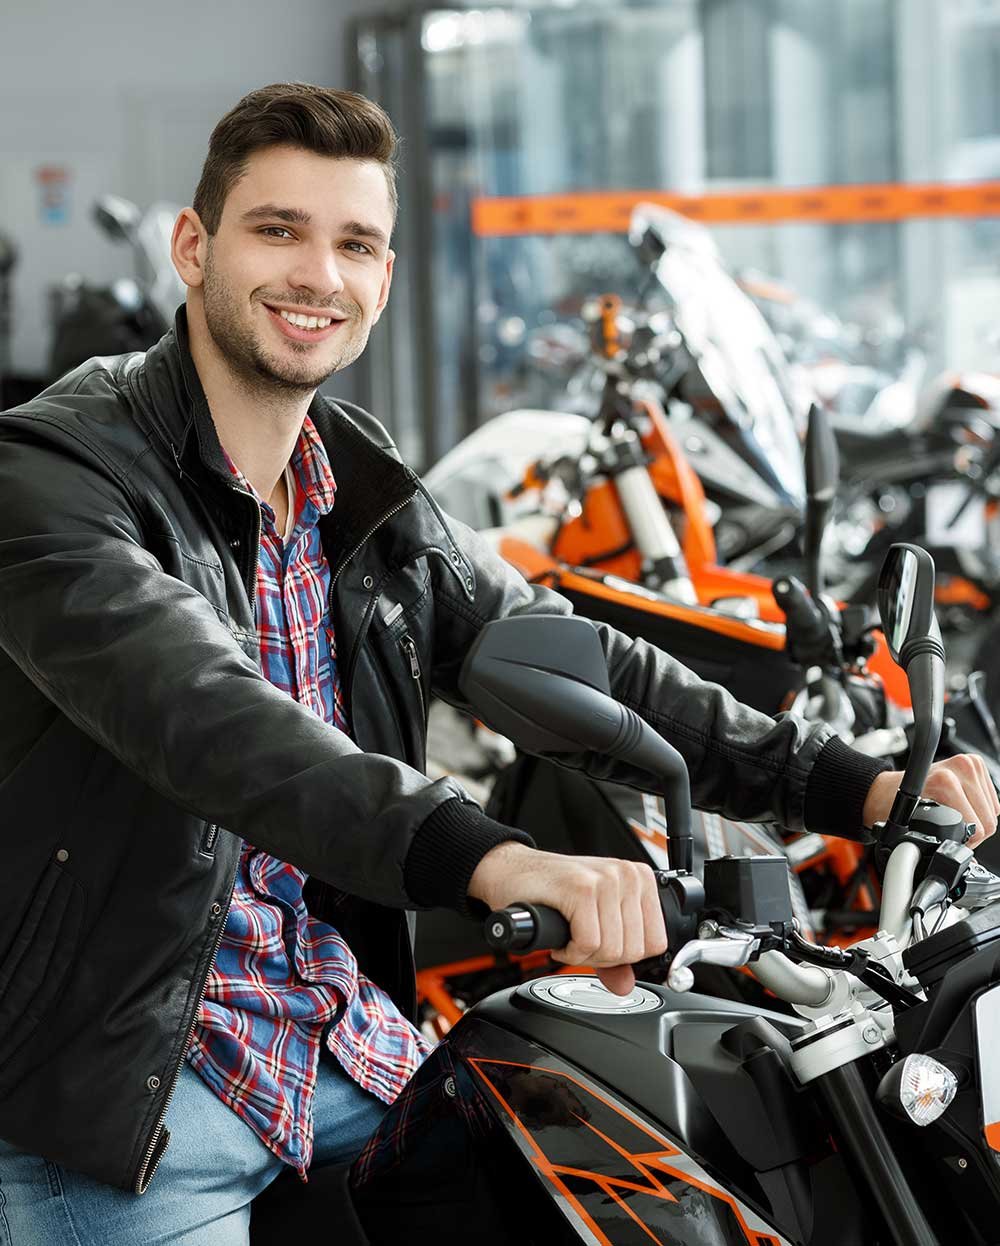 PrimeWay Motorcycle Loan Features